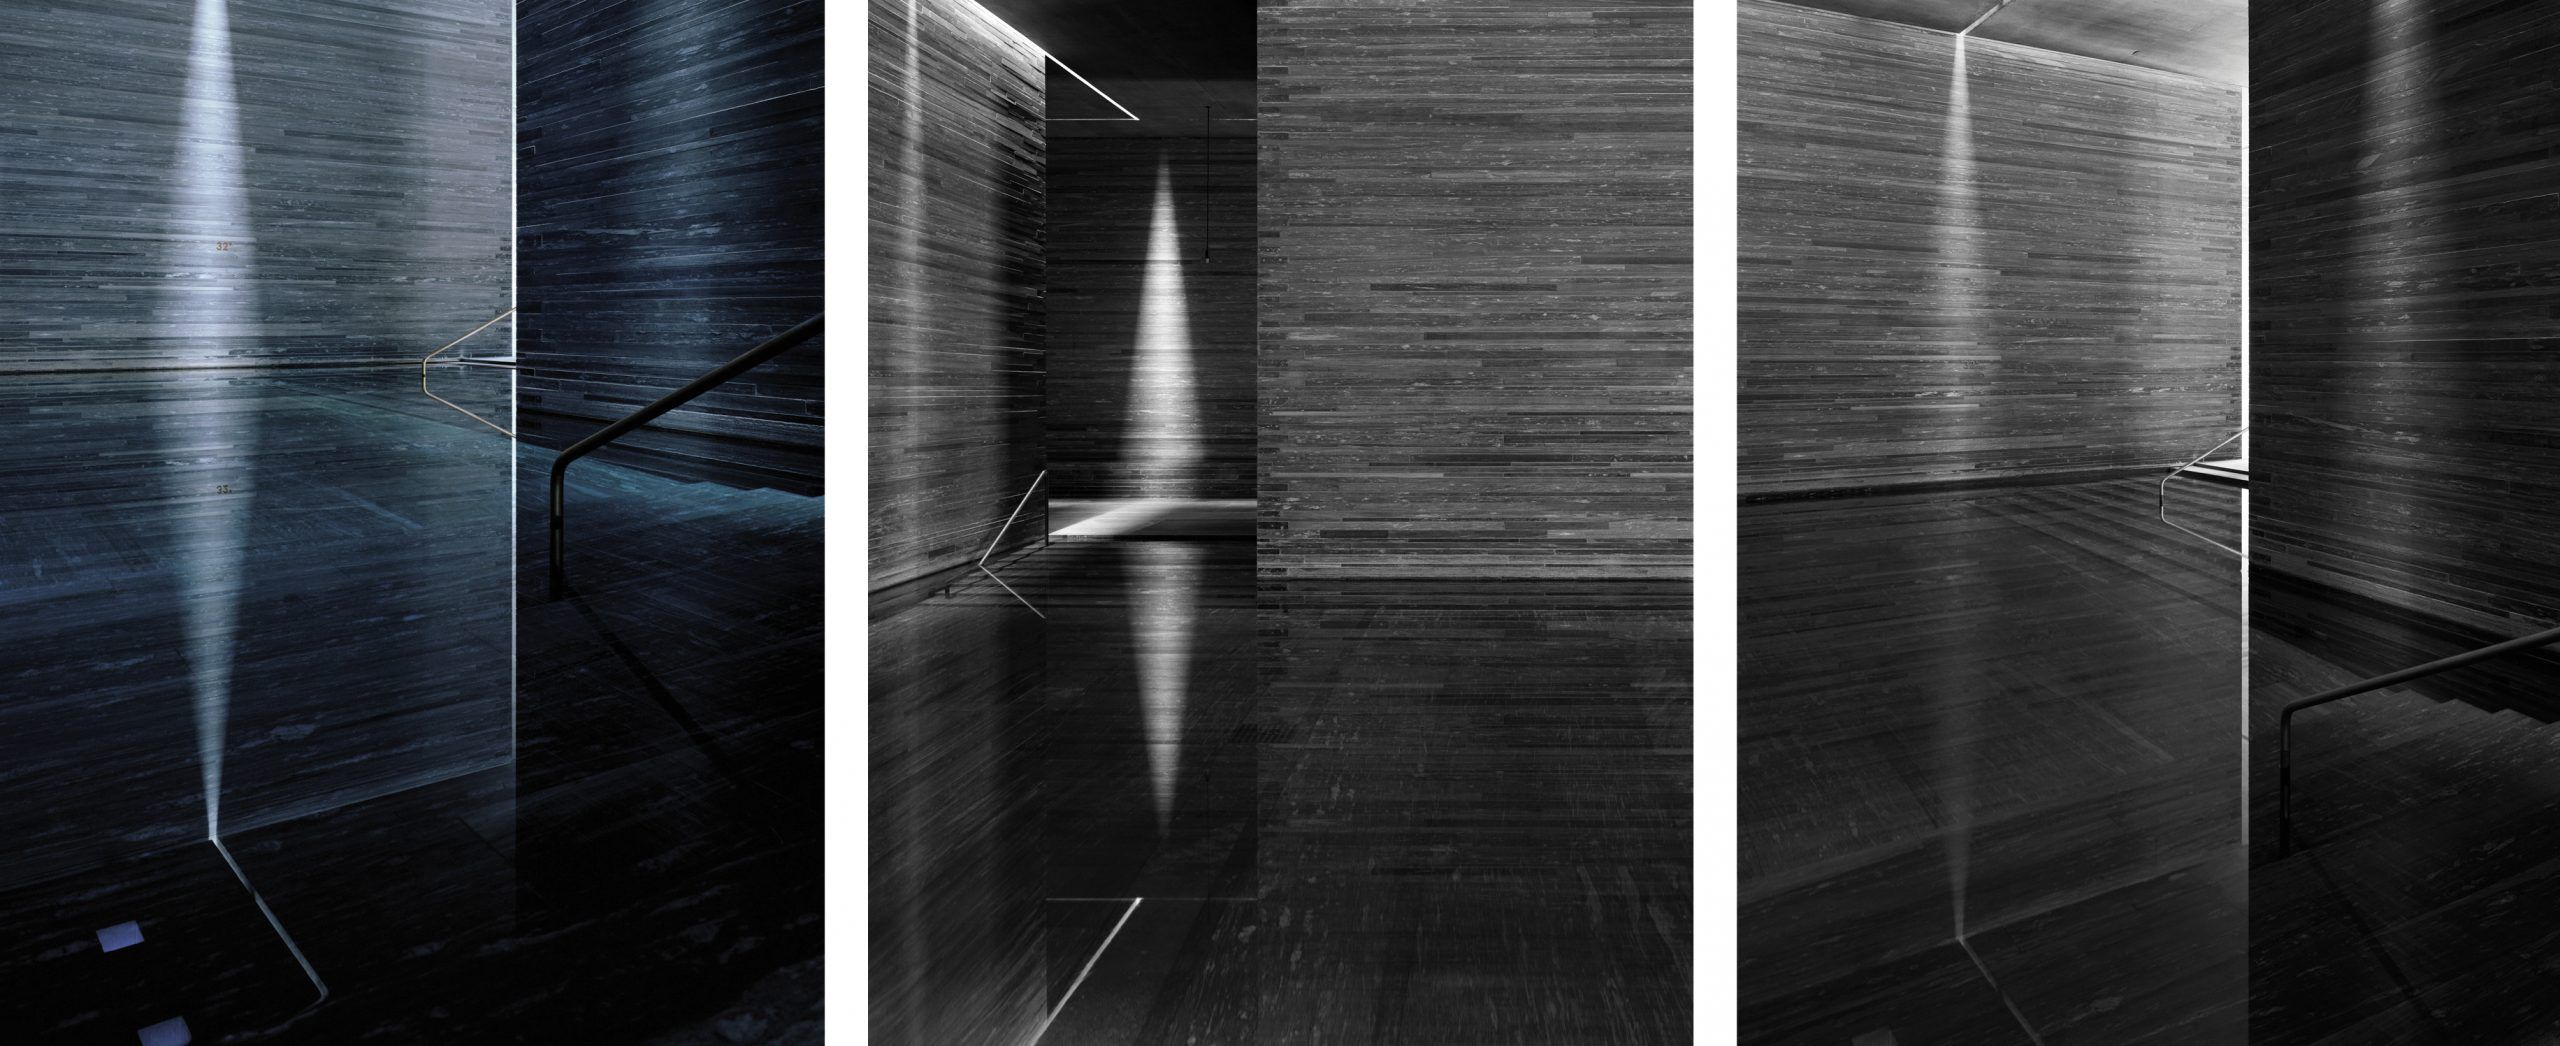 © Hélène Binet 'Therme Vals Triptychon' (Architecture by Peter Zumthor) courtesy ammann//gallery